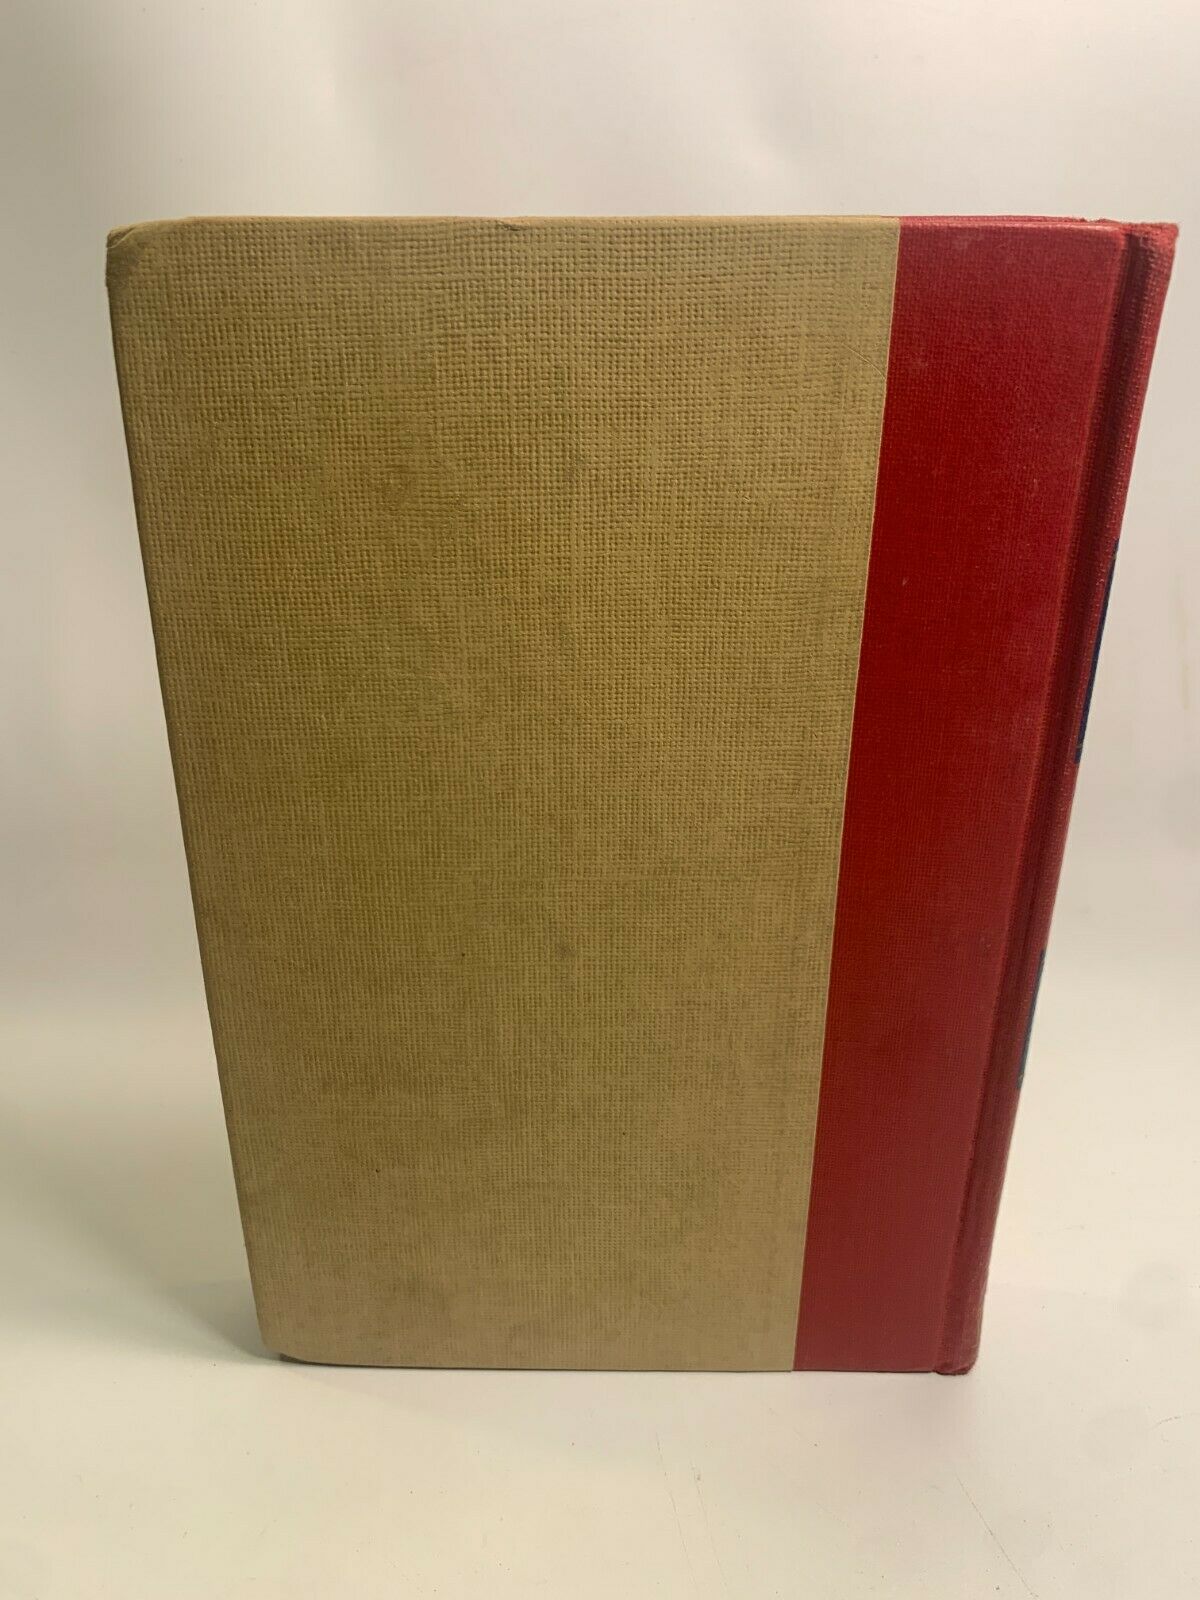 The New American Encyclopedia: Volume 8 TEM-ZWI by Adams, Lewis Mulford 1948